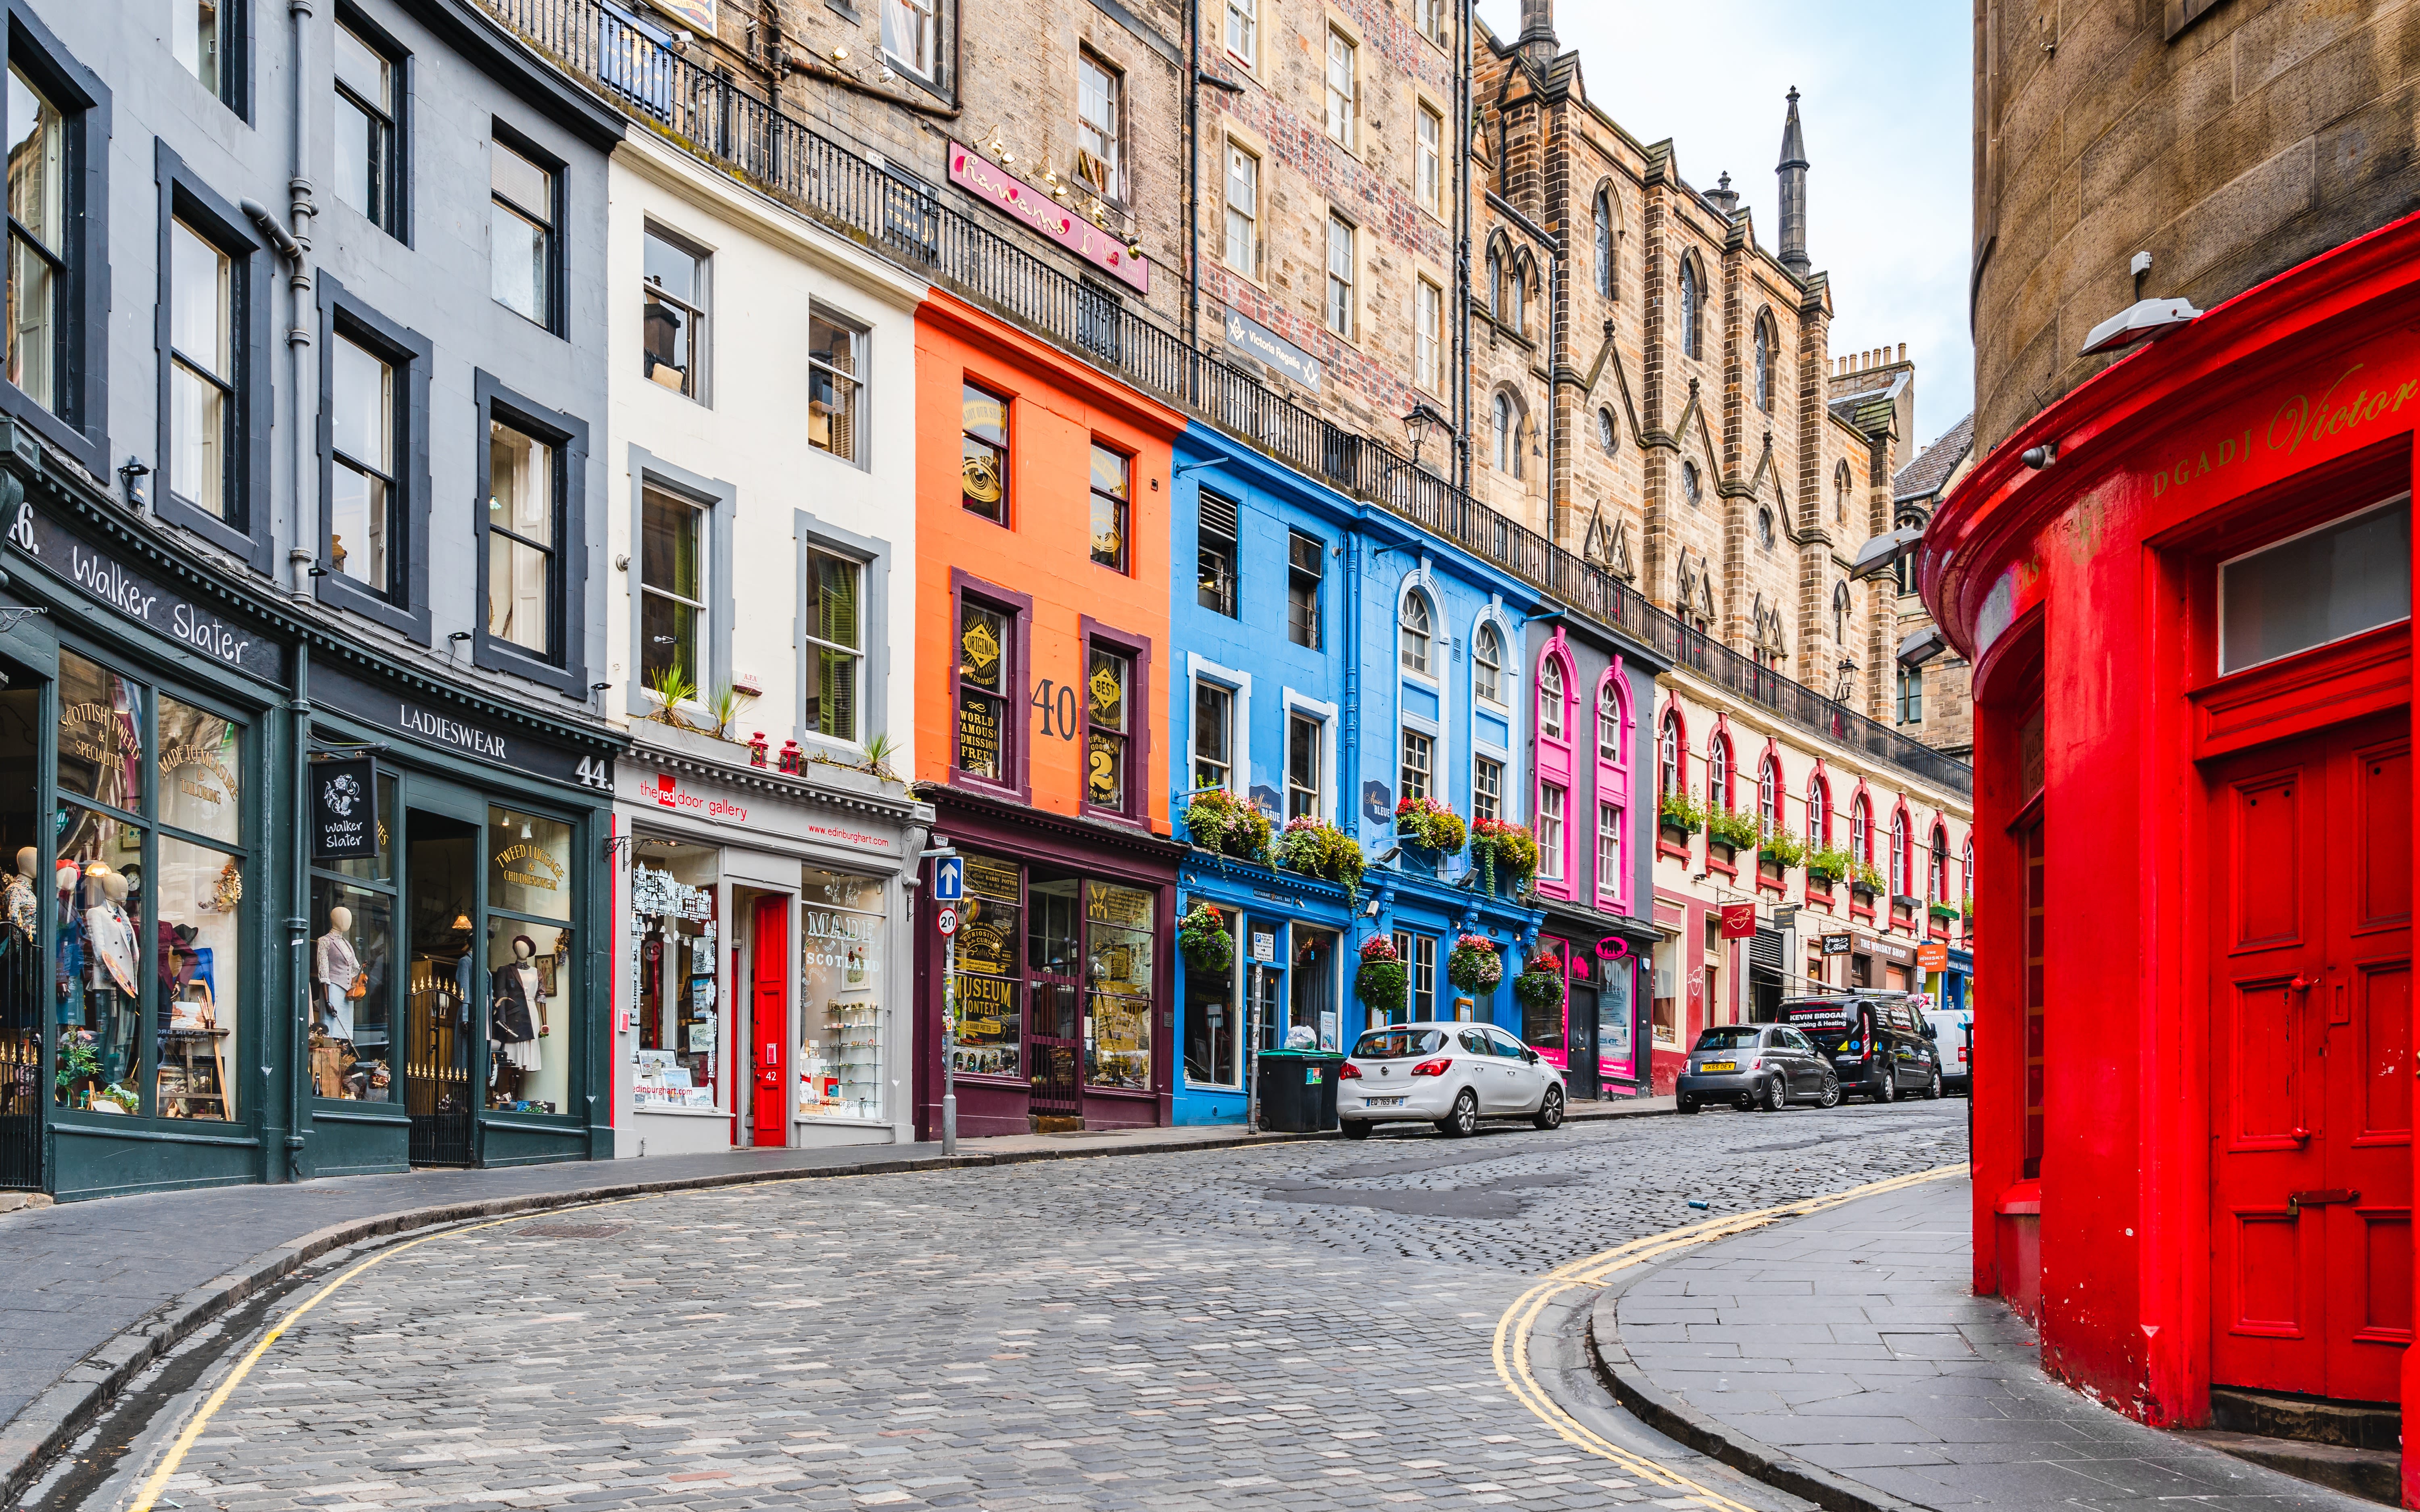 An image of Victoria Street in Edinburgh, Scotland